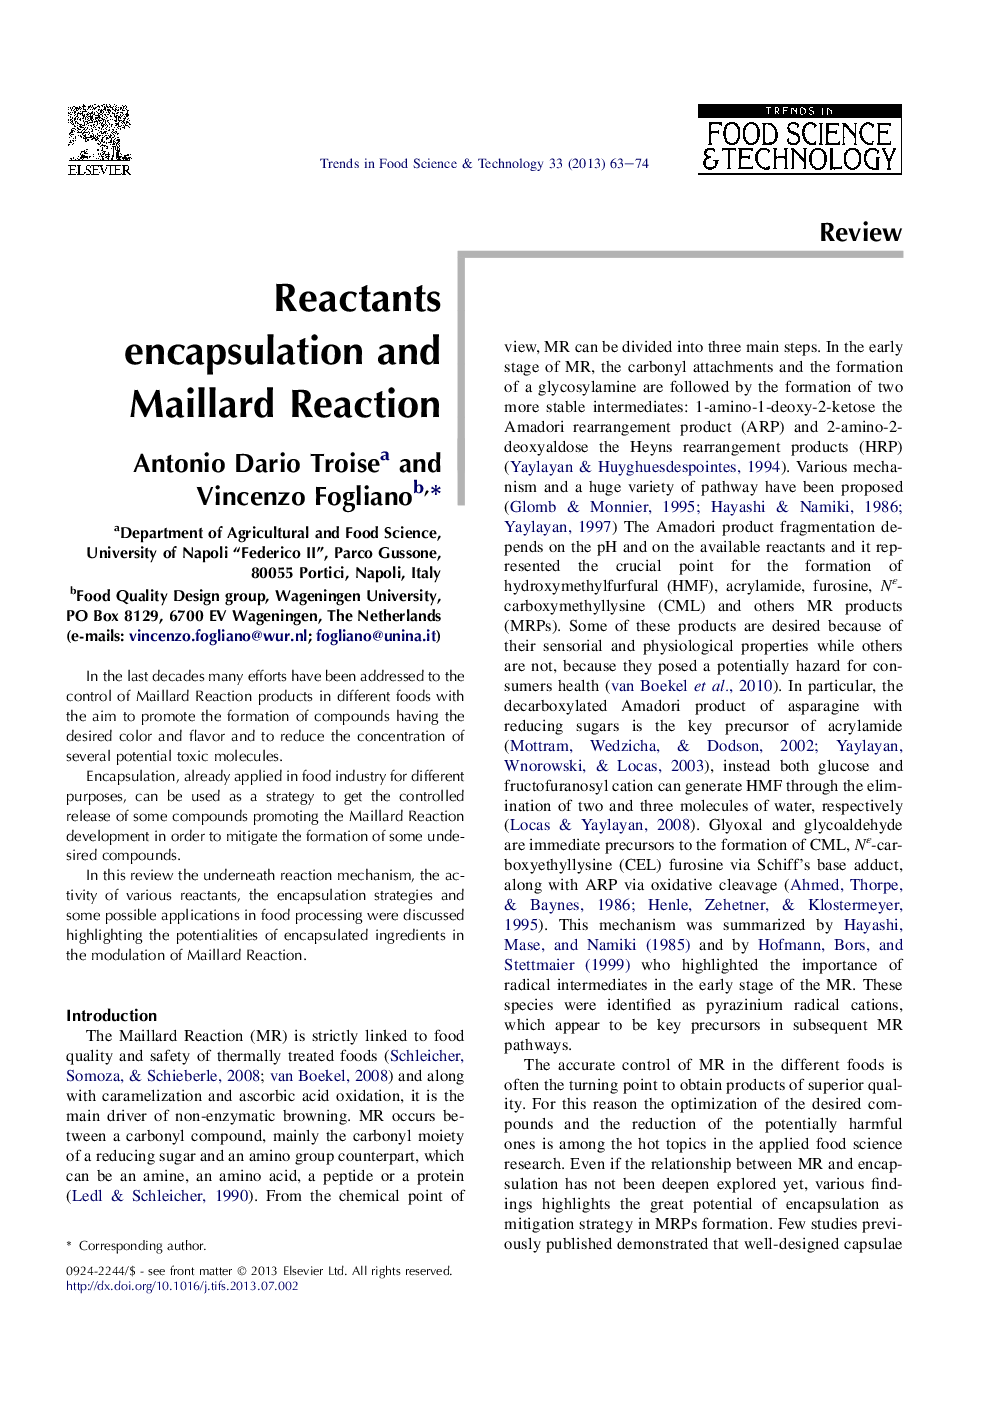 Reactants encapsulation and Maillard Reaction